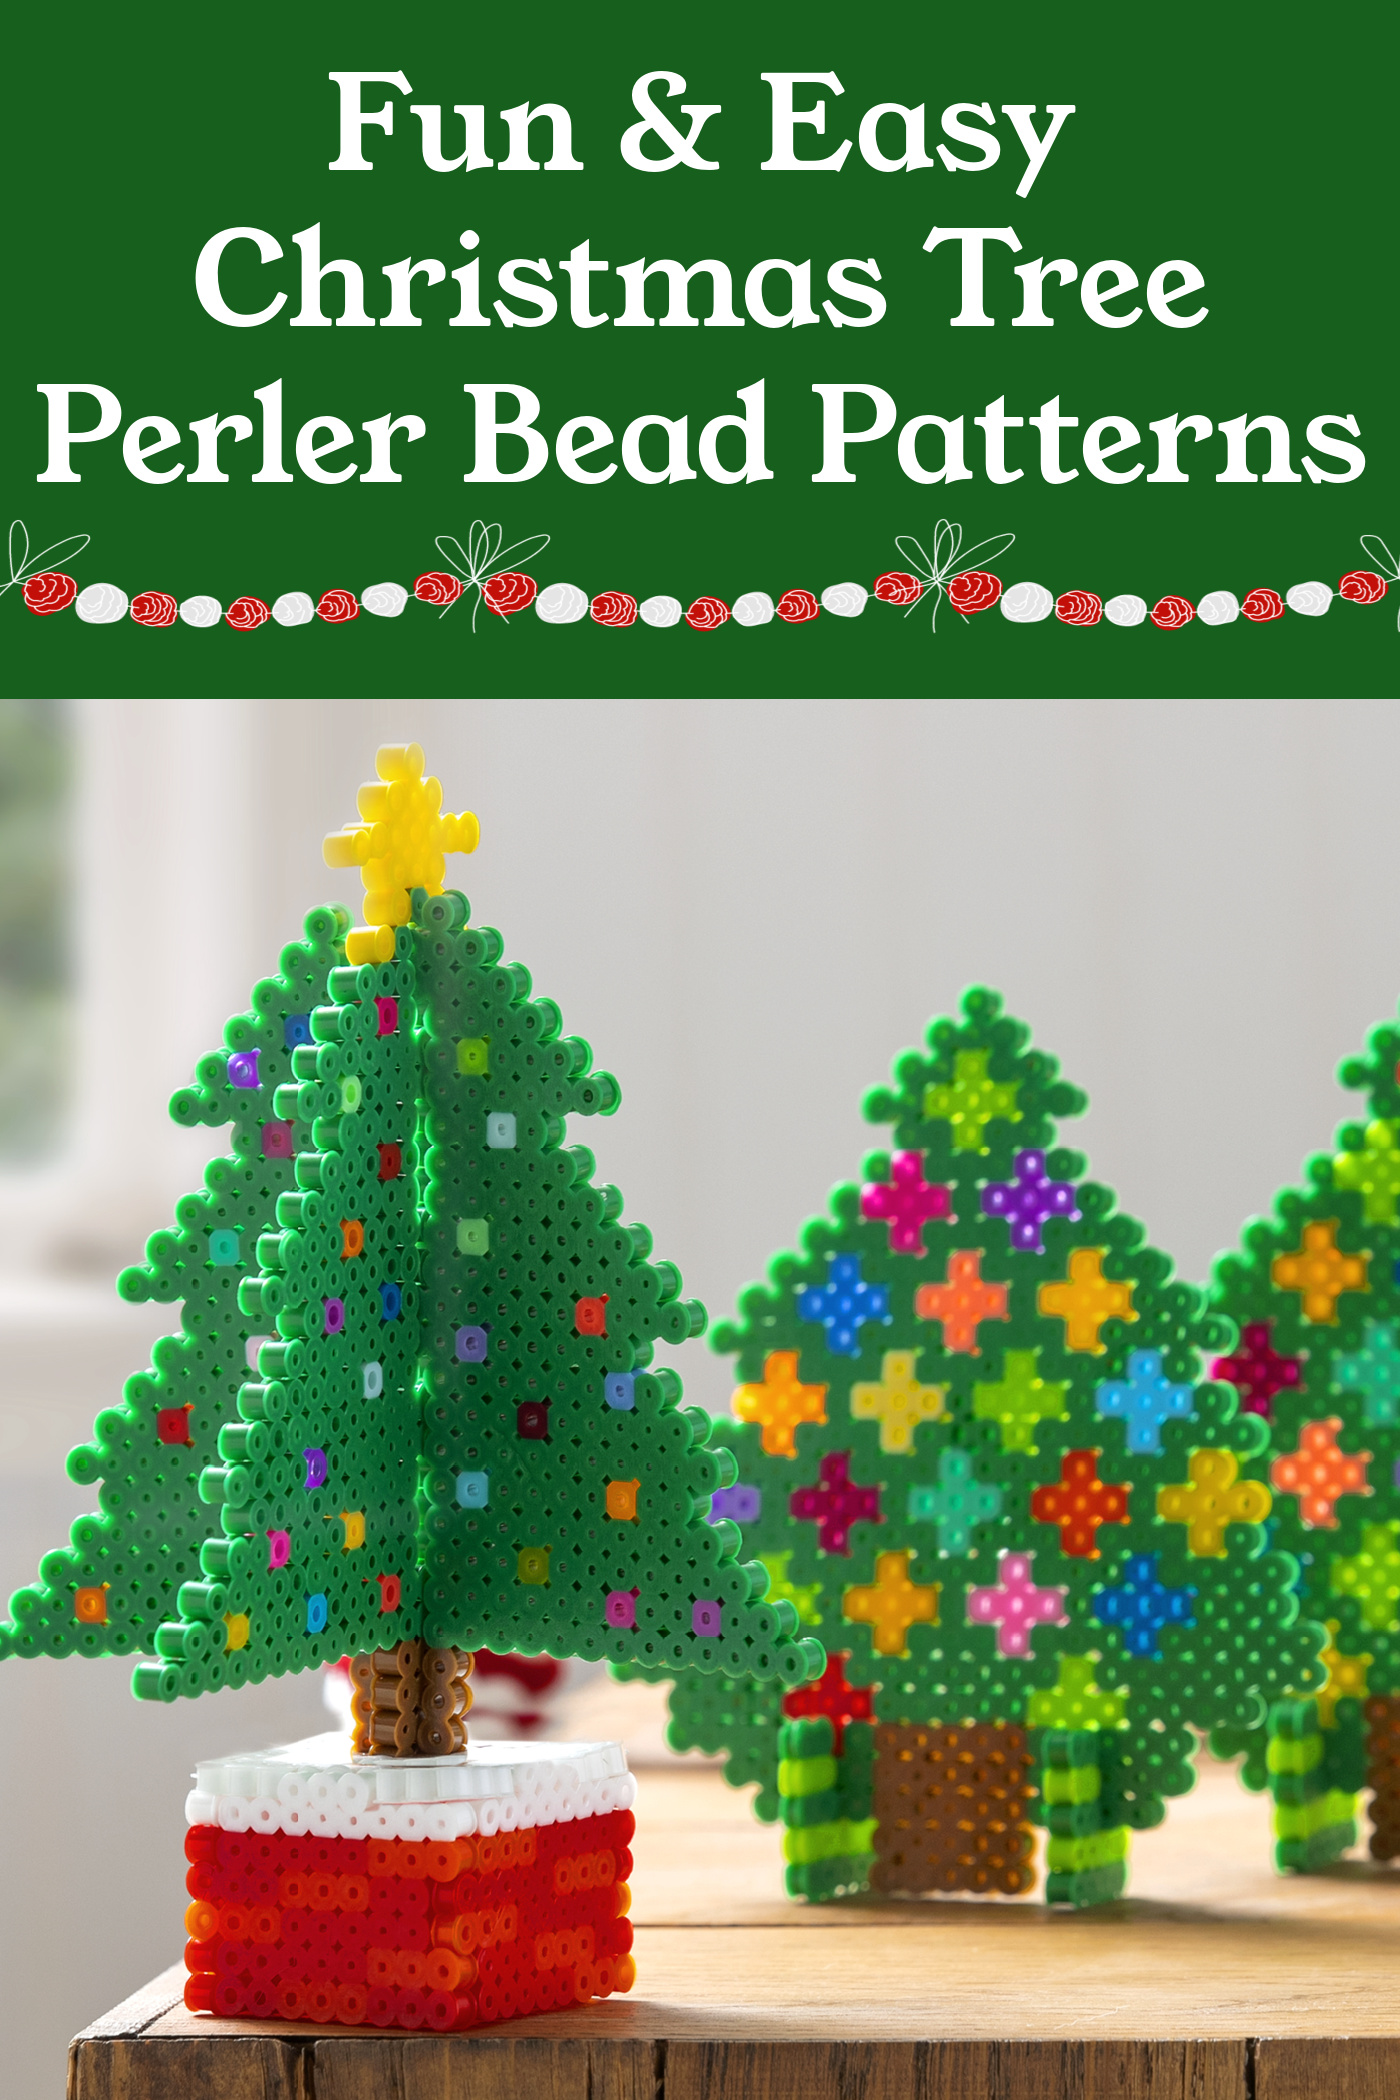 Fun and easy Christmas tree perler beads